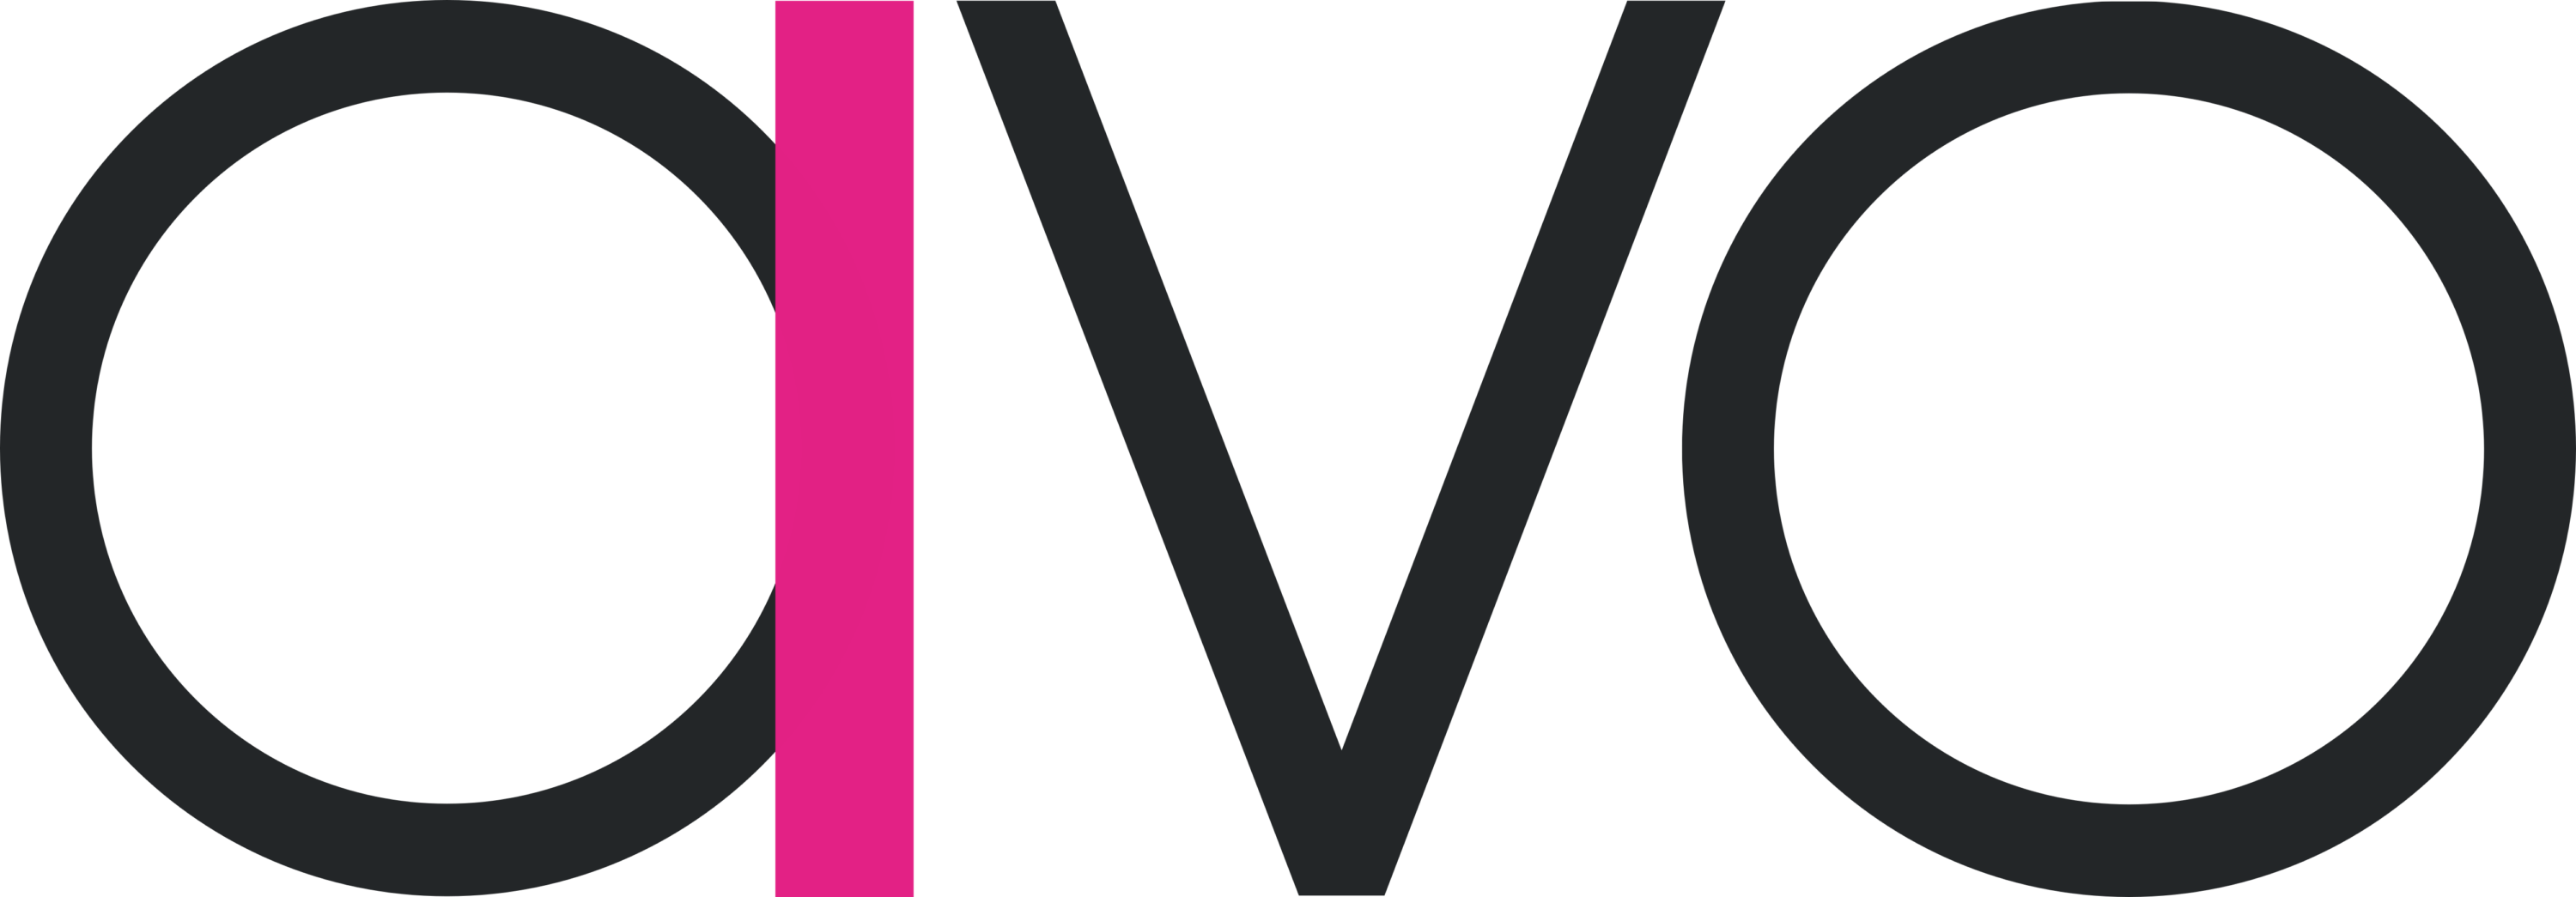 Avo App Logo